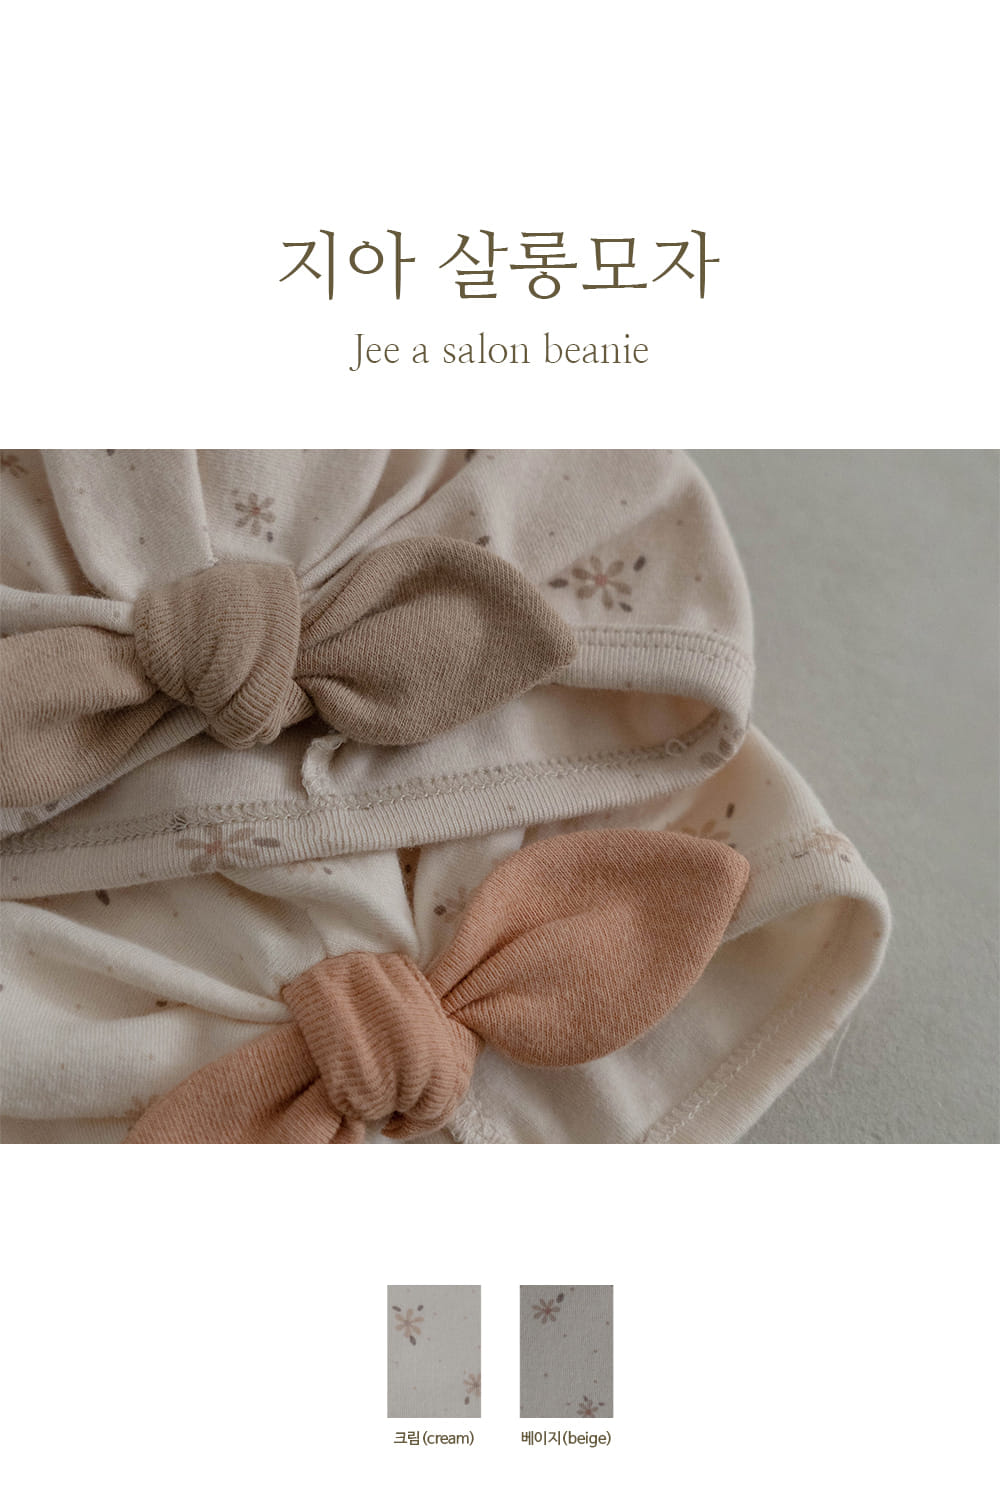 Peekaboo - Korean Baby Fashion - #babyoninstagram - Jia Salon Hats